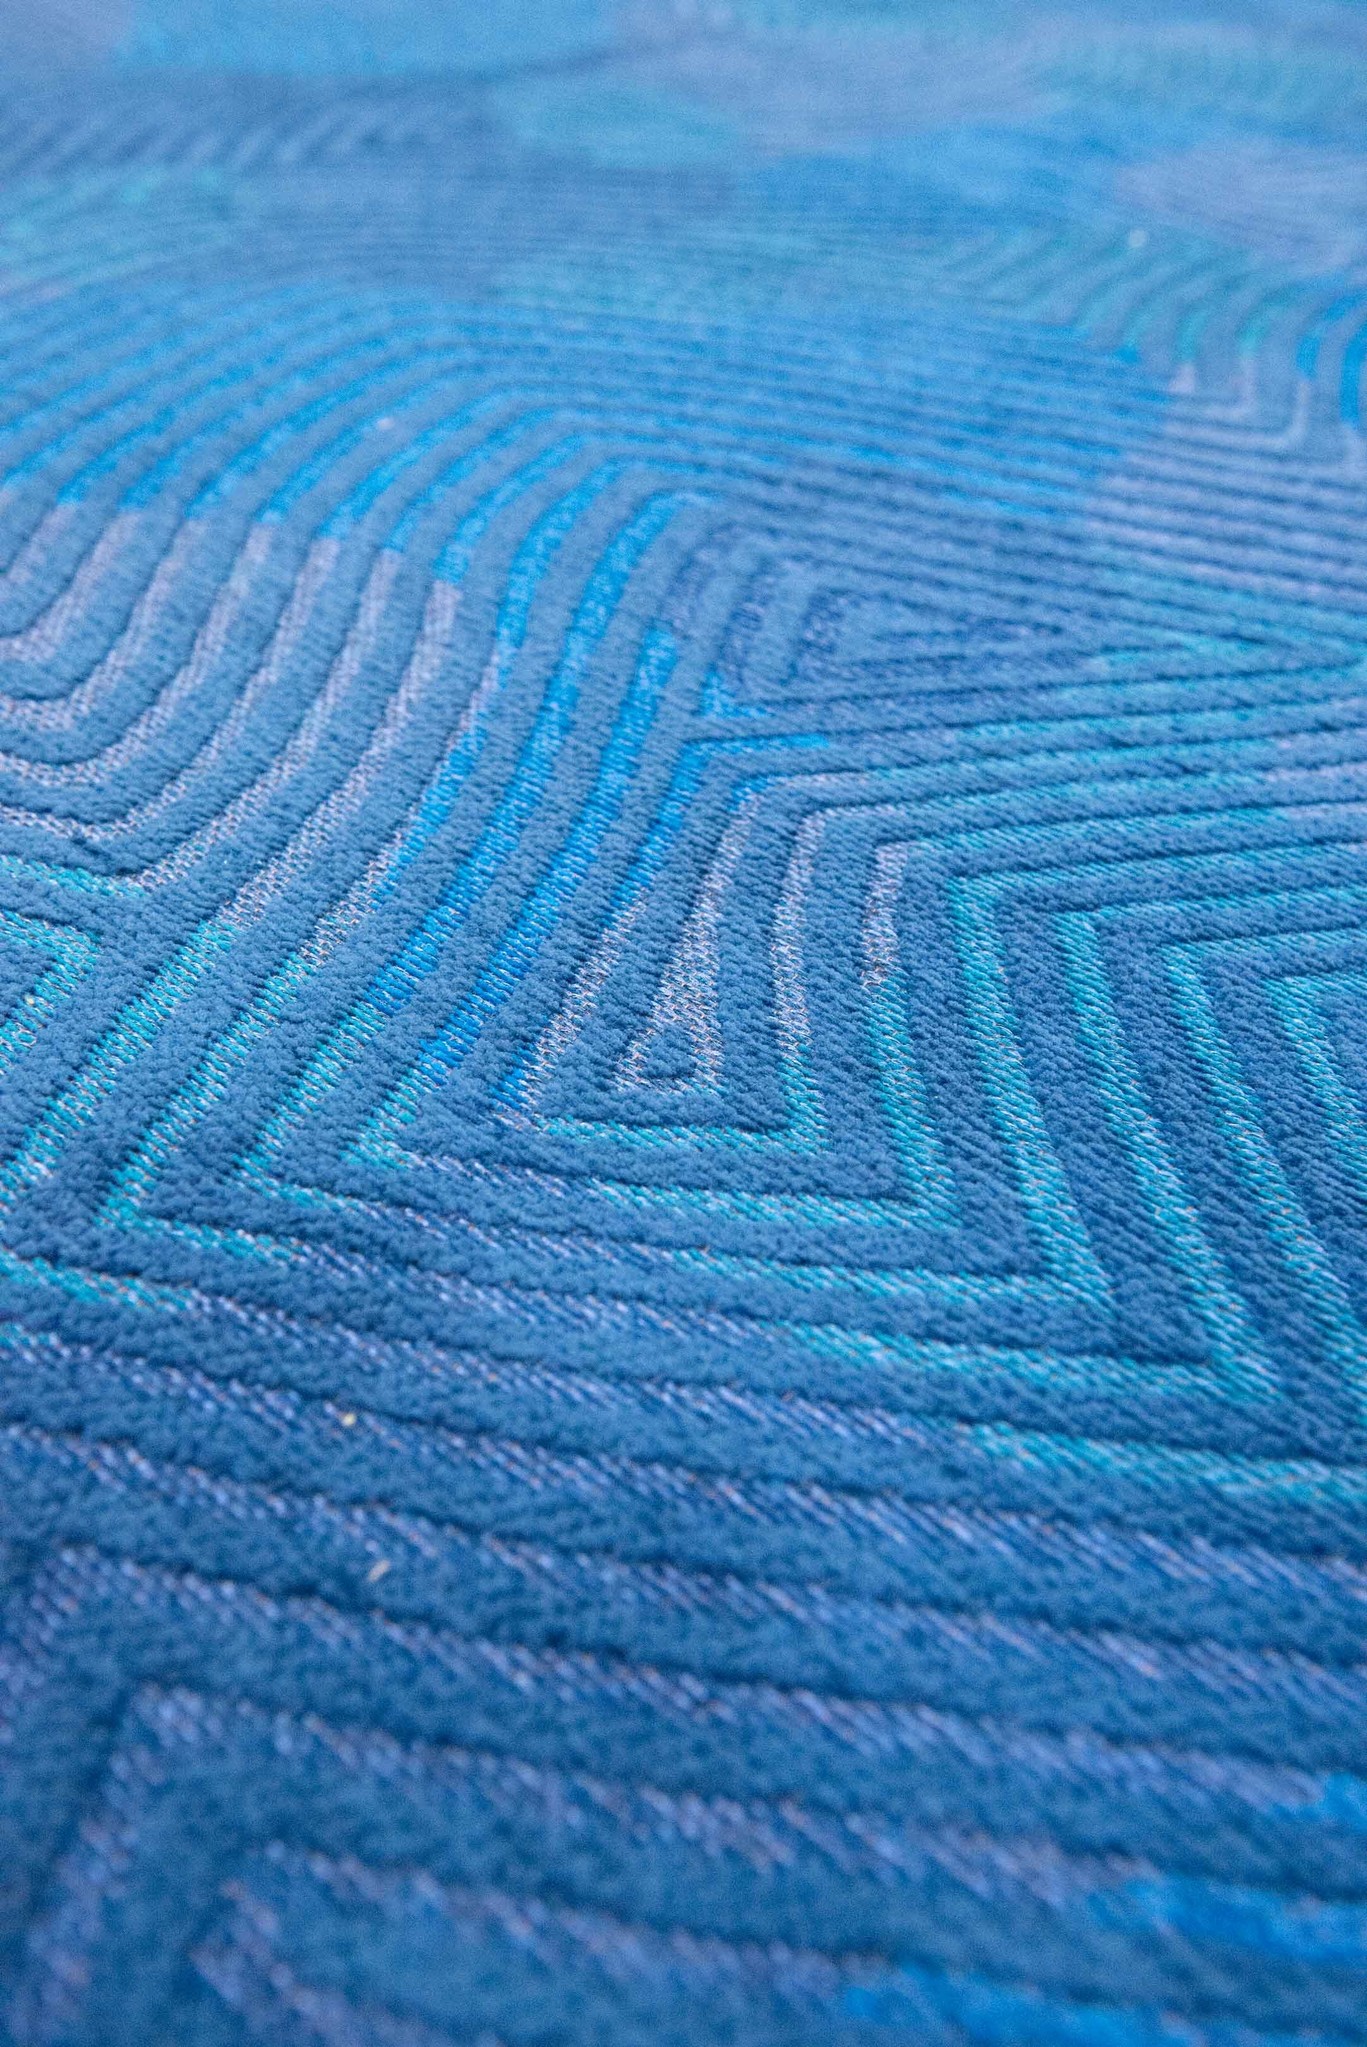 Blue Flatwoven Rug ☞ Size: 2' 7" x 5' (80 x 150 cm)